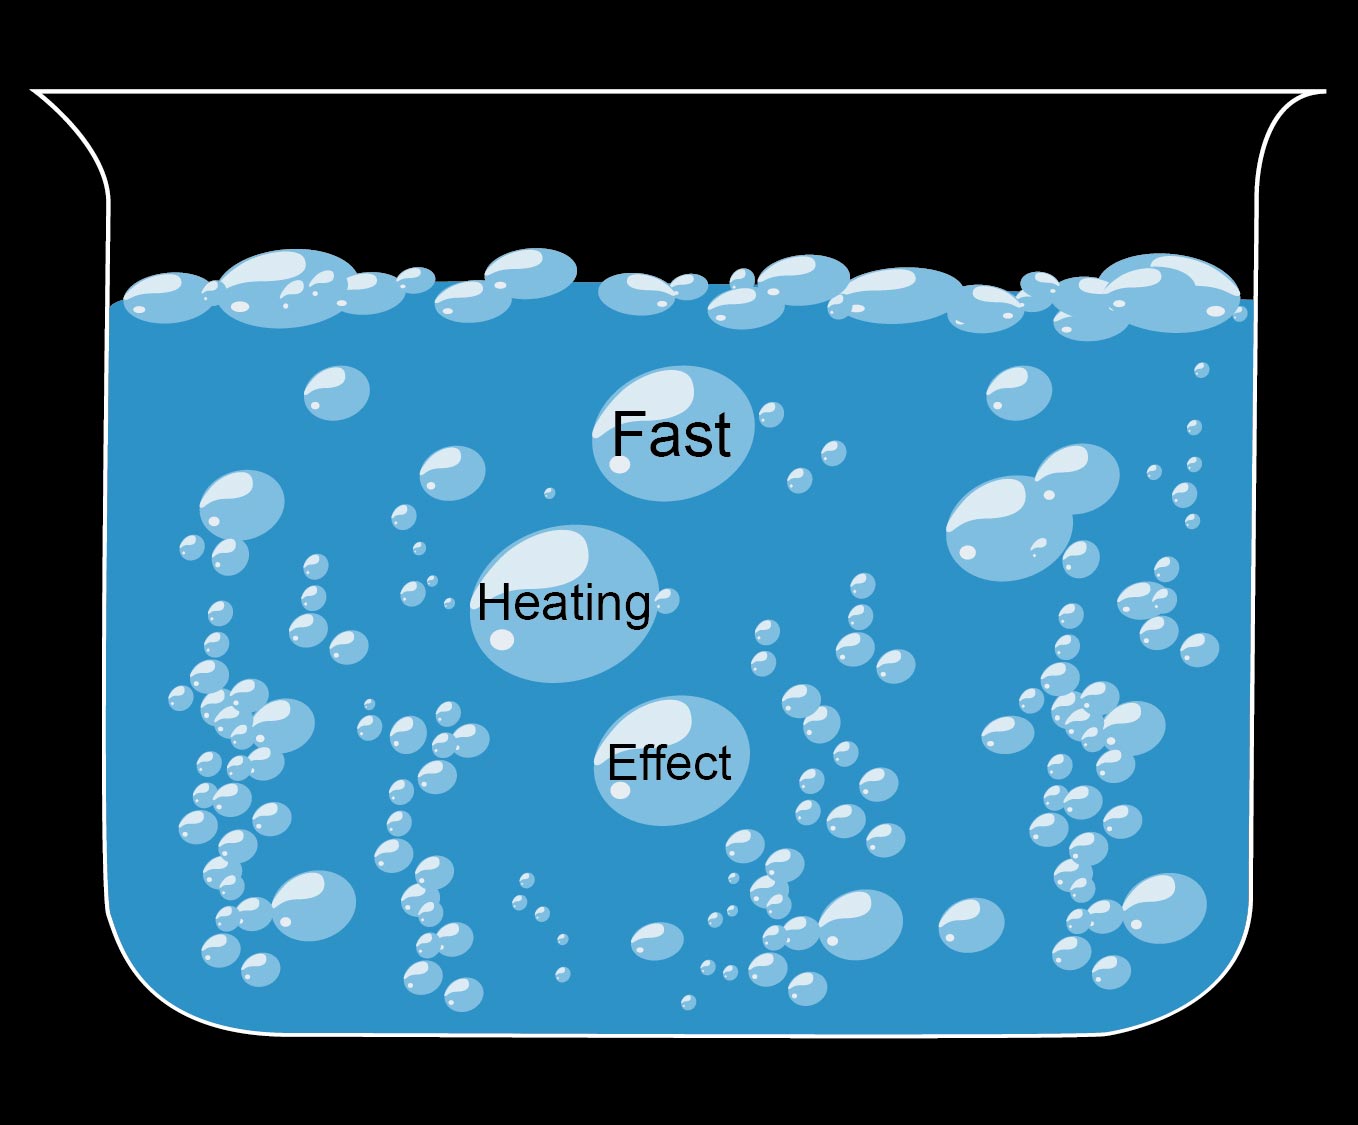 Fast Heating Effect of a Lotus Rock Casserole